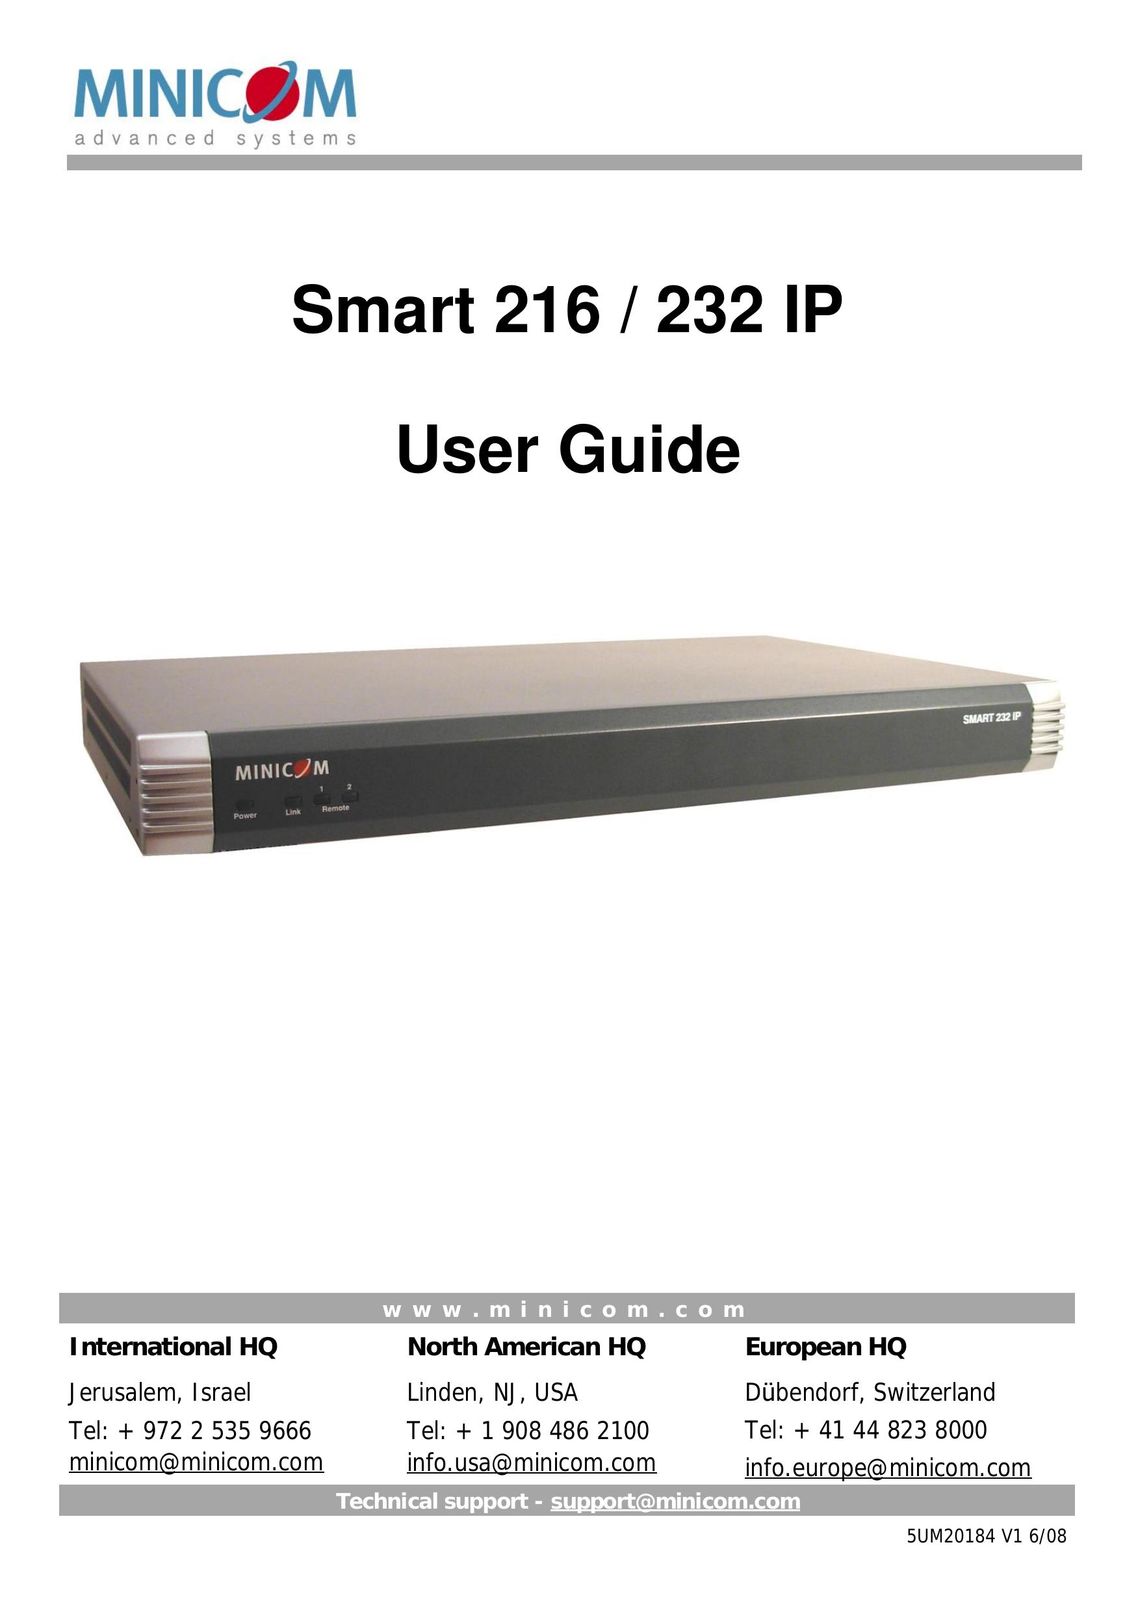 Minicom Advanced Systems 232 IP Switch User Manual